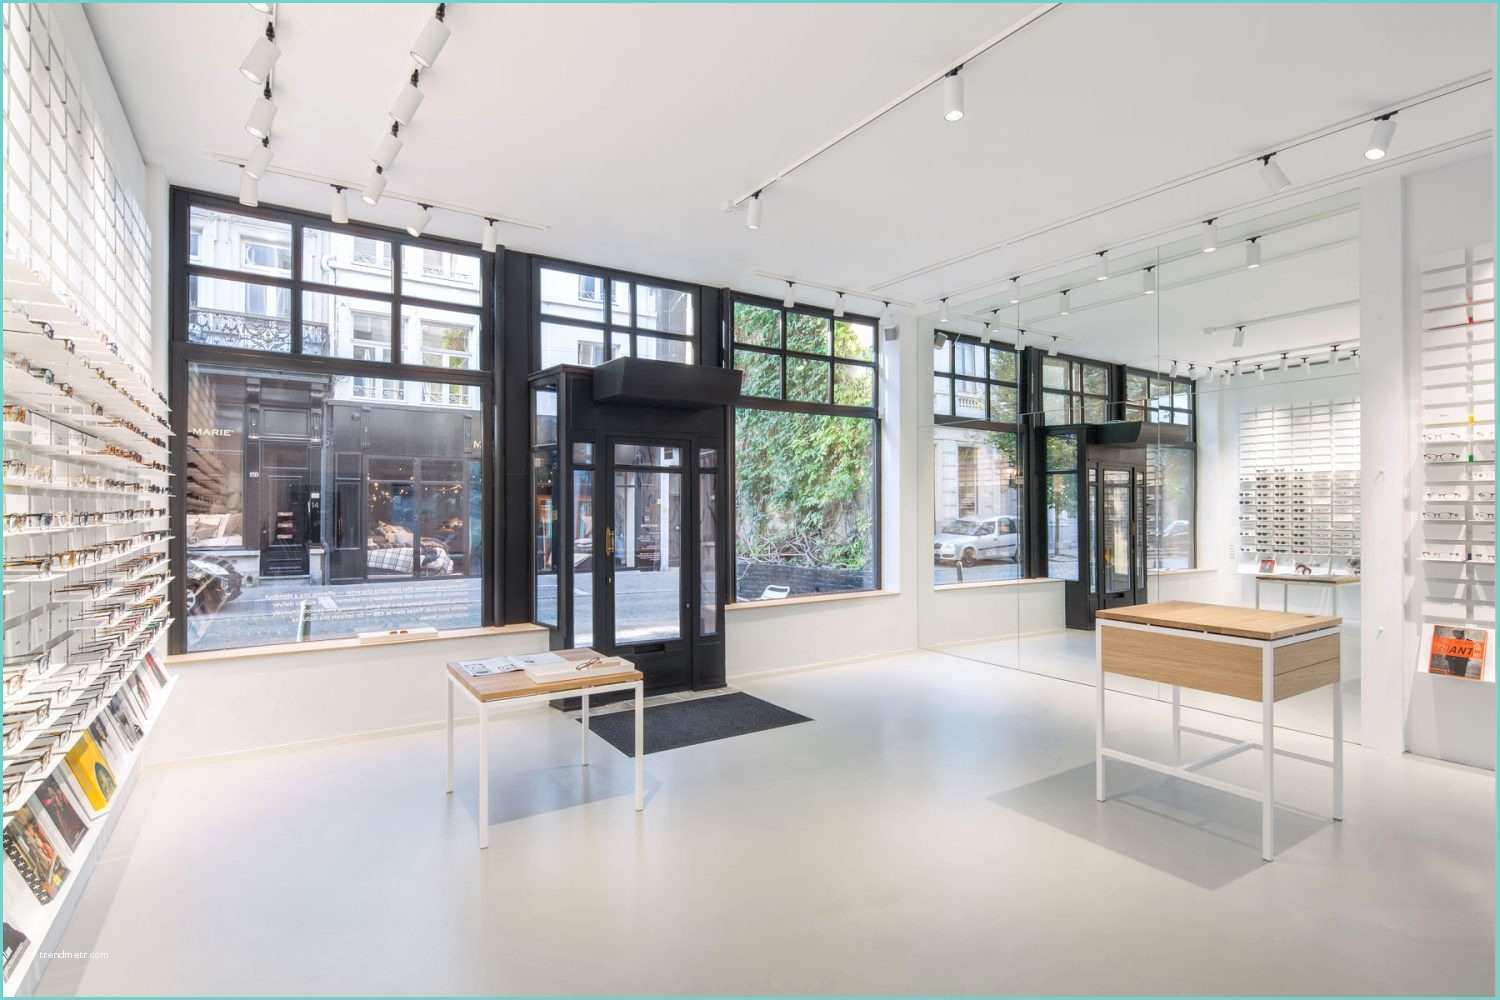 Studio Di Interior Design Ace & Tate Antwerp – Standard Studio